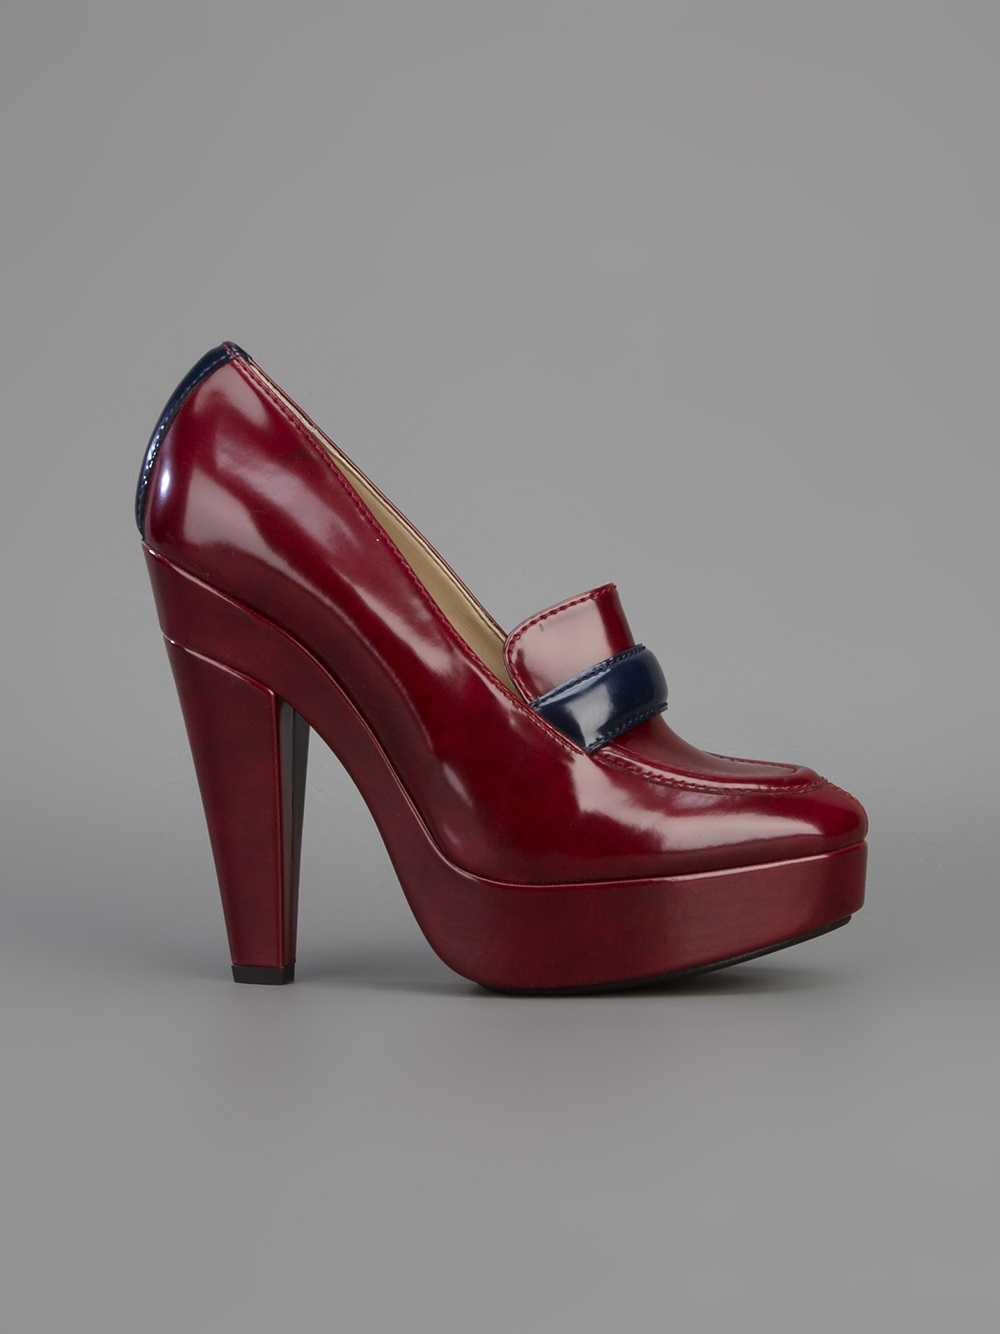 Stella mccartney High Heel College Shoe in Red | Lyst